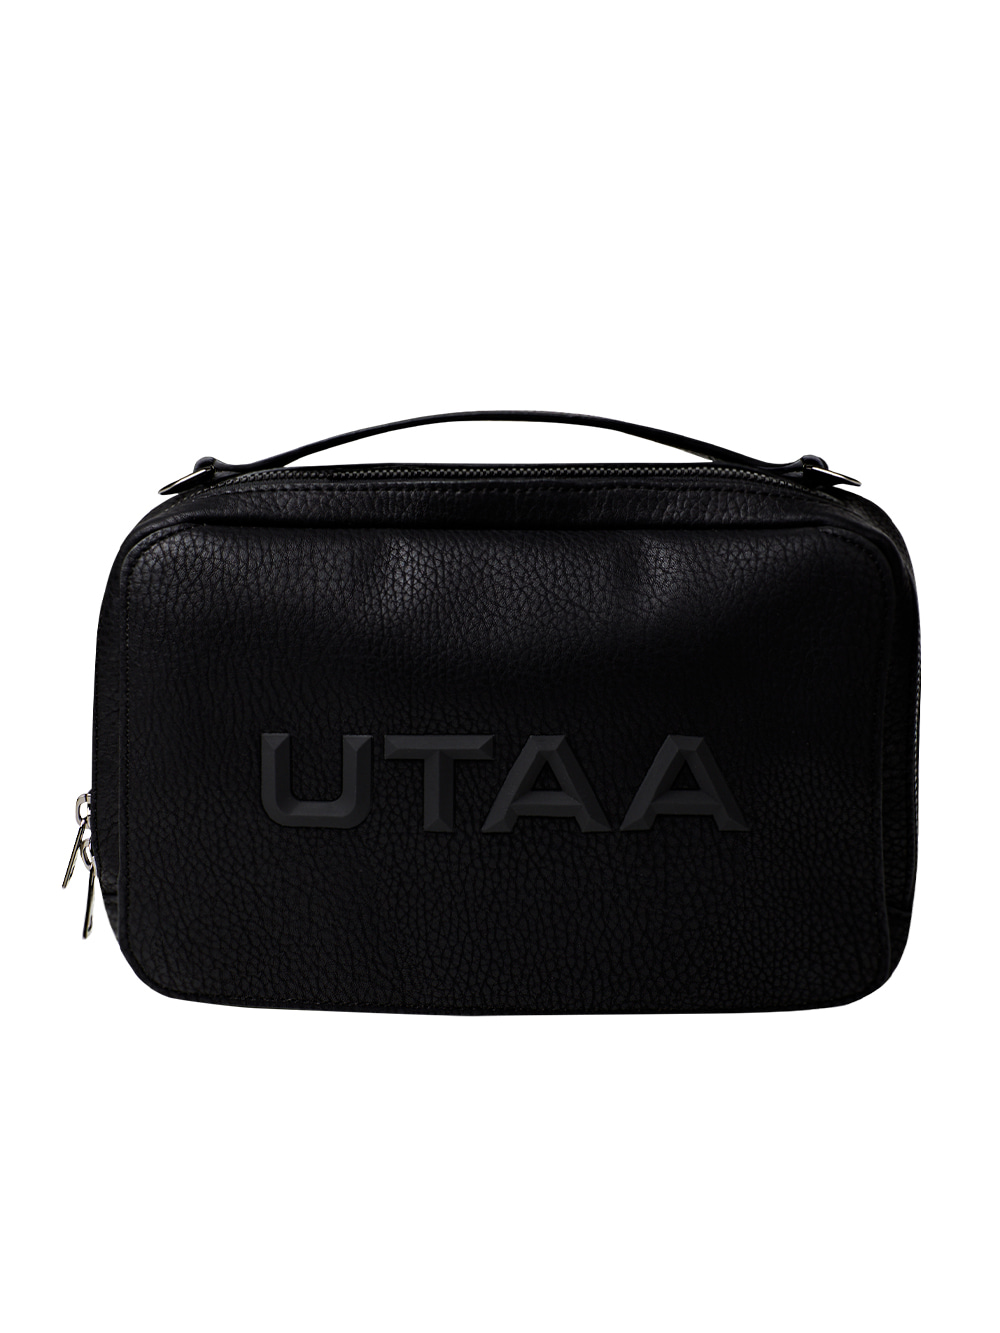 UTAA Figure Logo Strap Pouch Bag : Black(UC0GAU107BK)